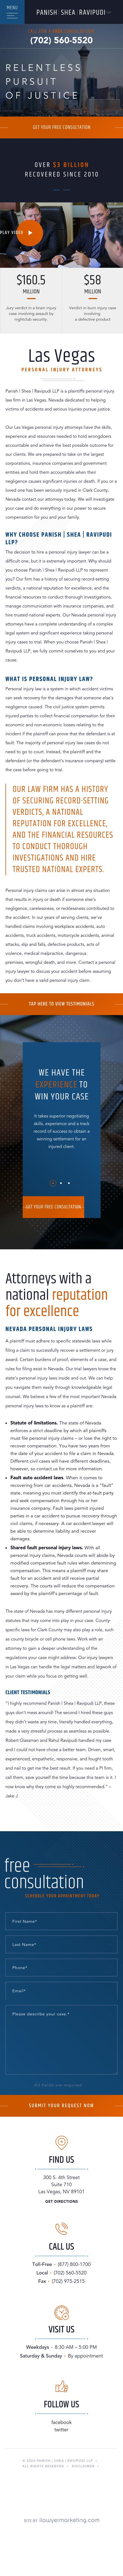 Panish Shea & Boyle, LLP - Las Vegas NV Lawyers